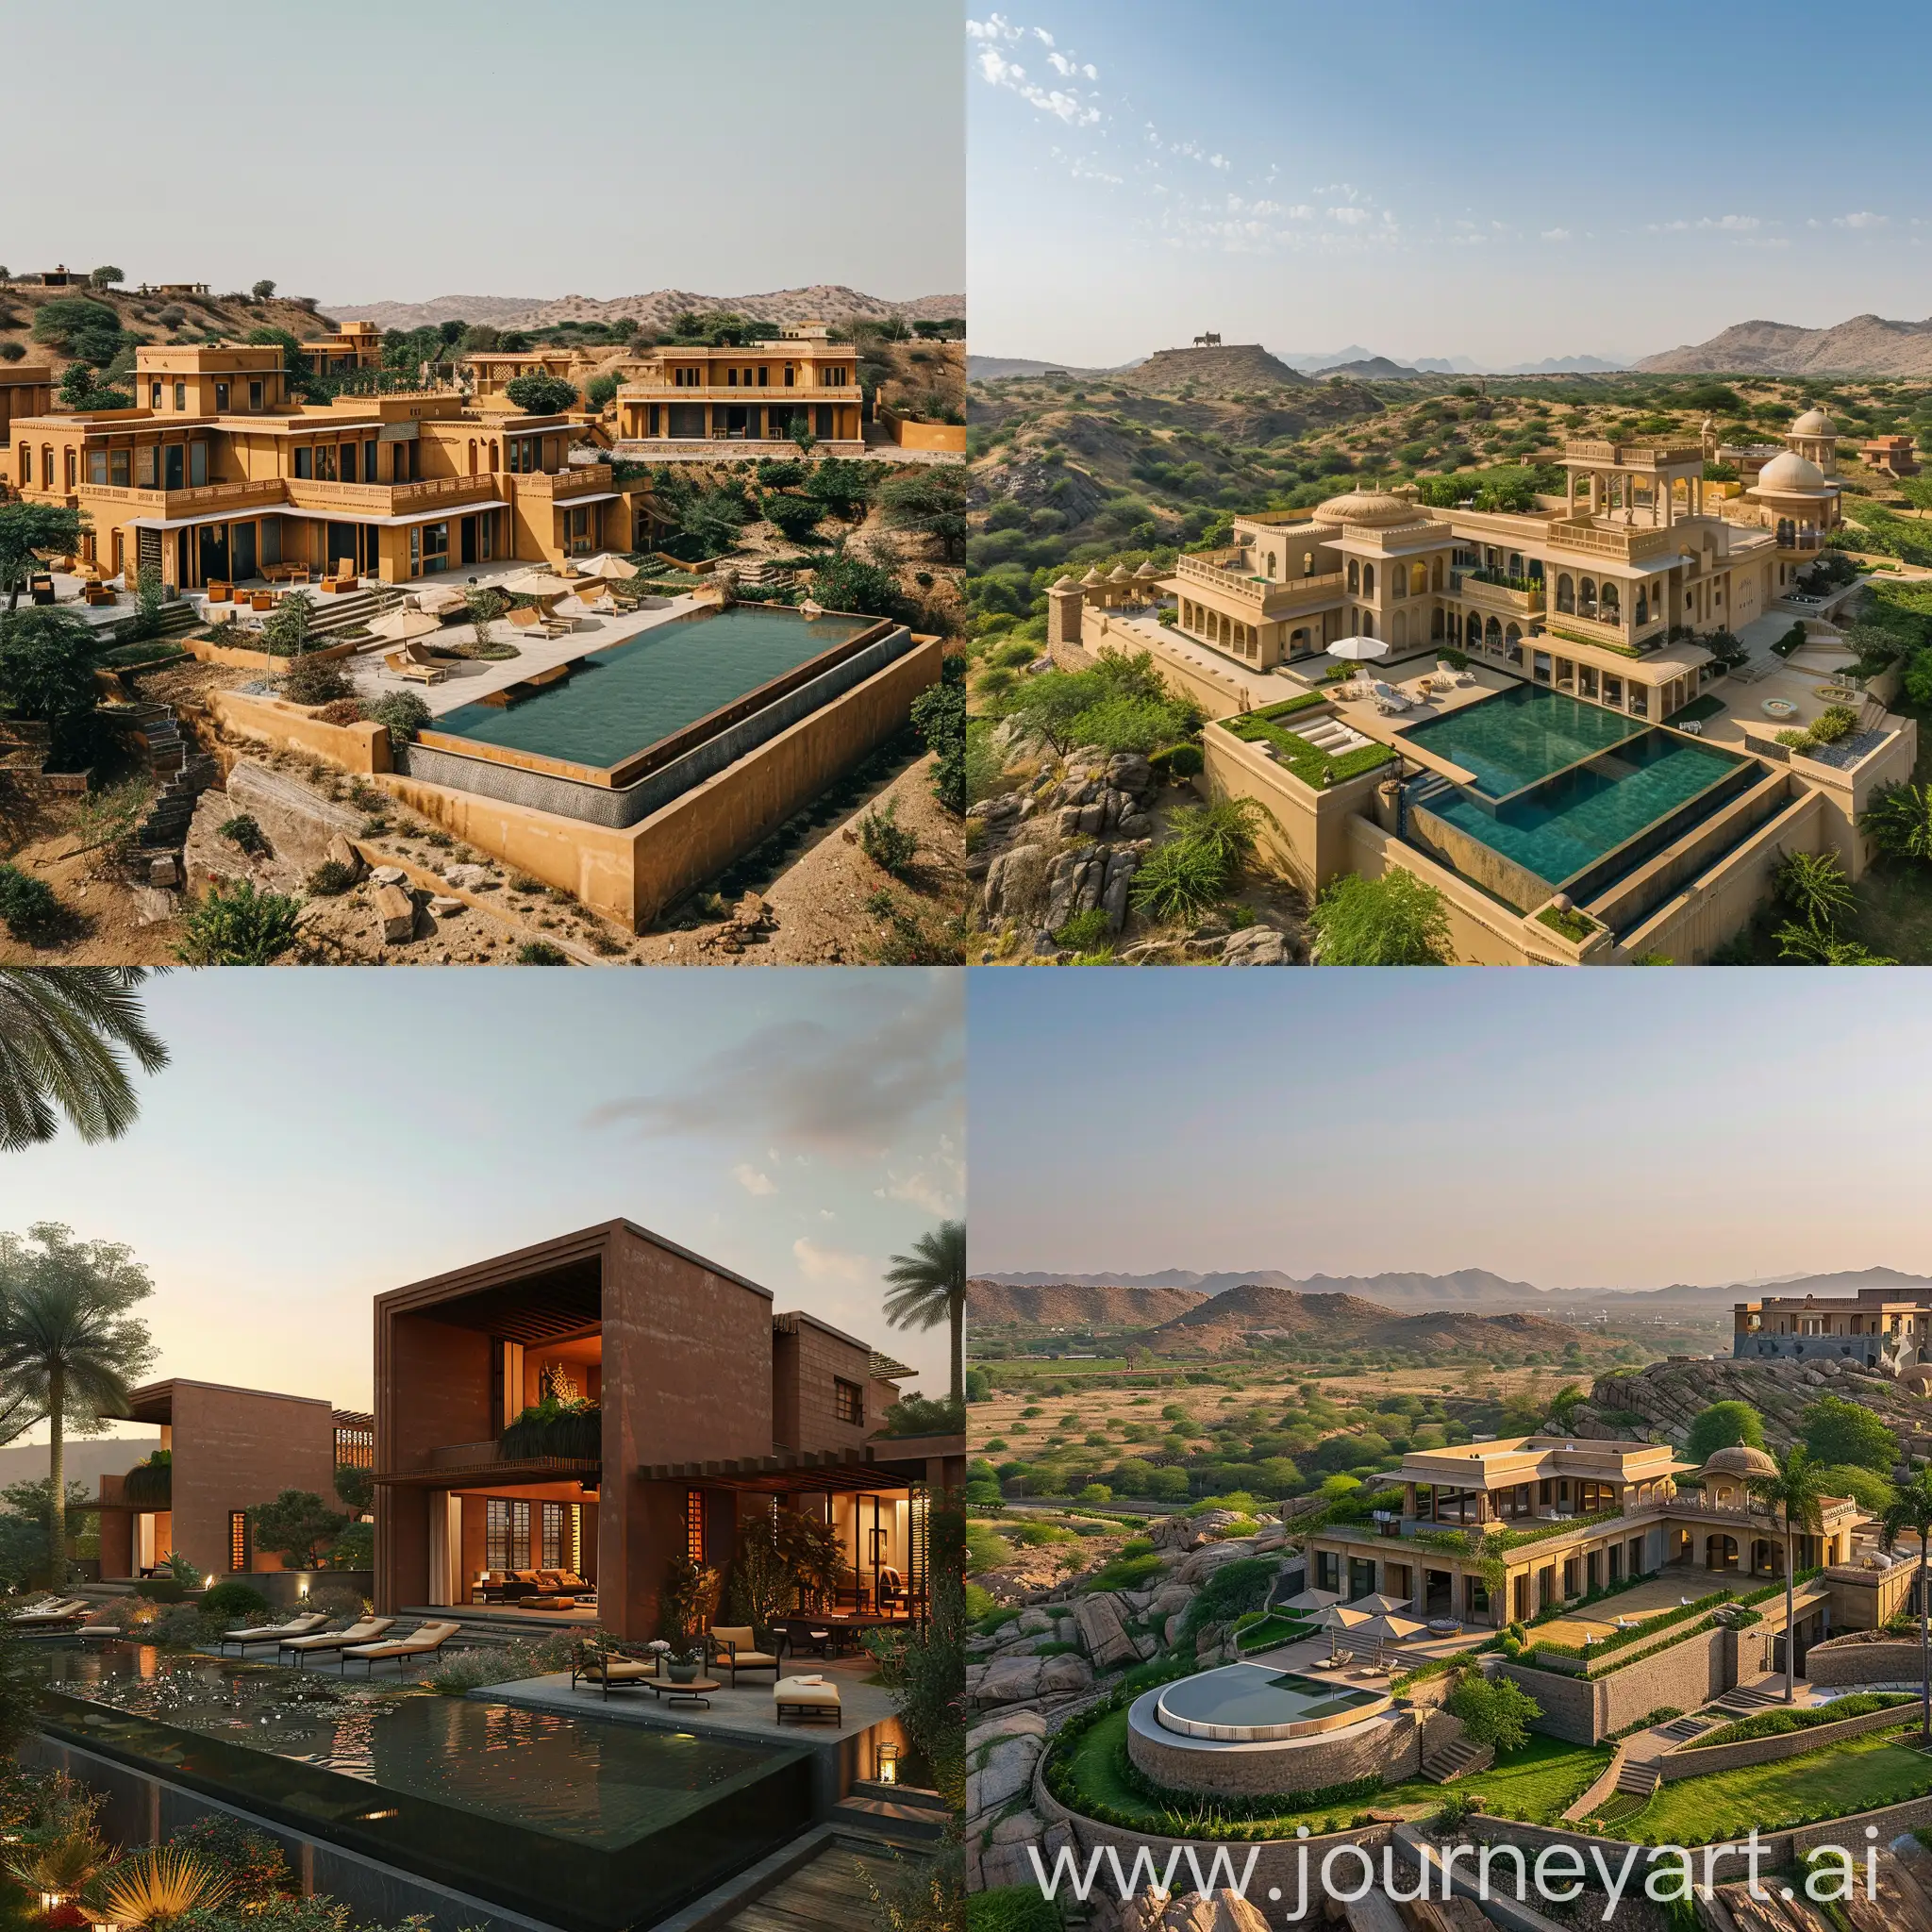 Rajasthan-Landscape-Resort-with-Modern-Architecture